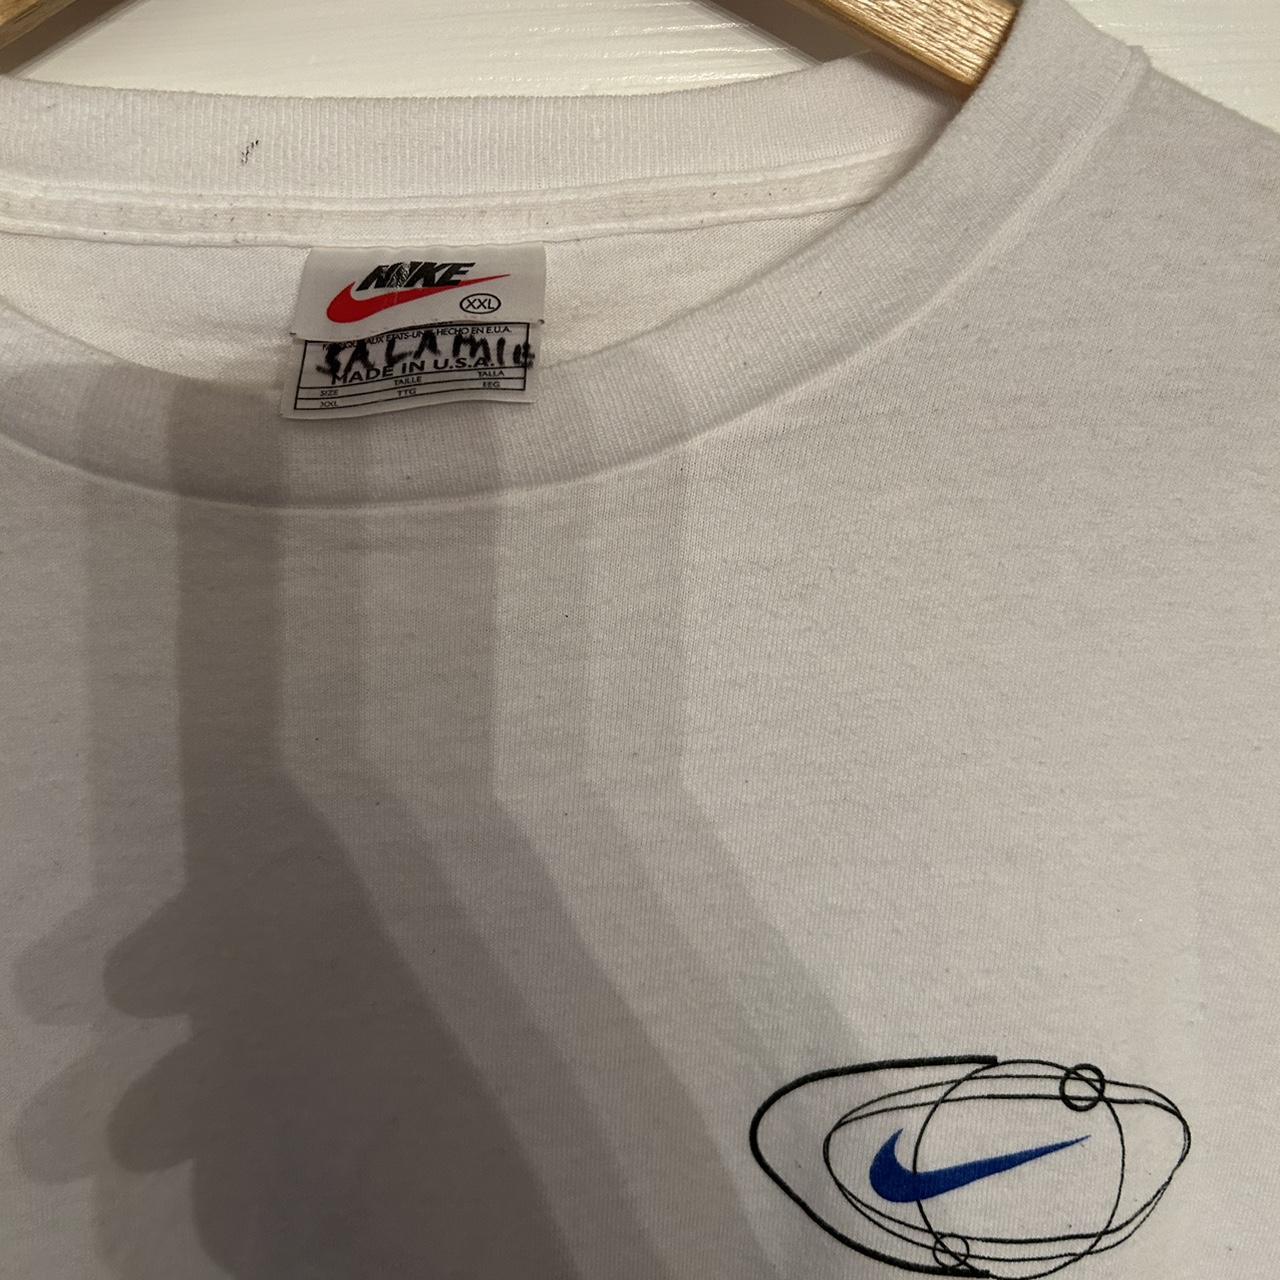 Nike Men's White and Blue T-shirt (4)